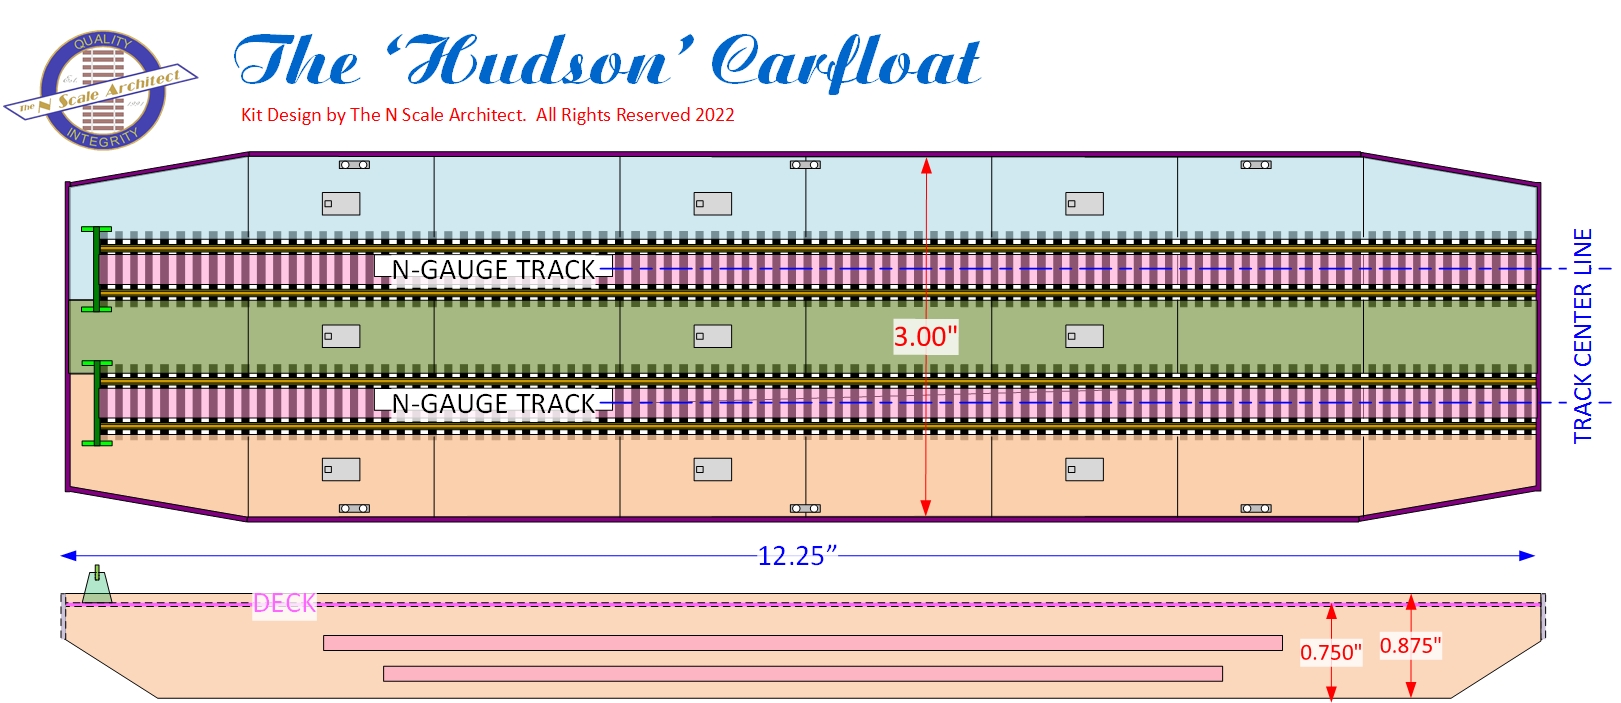 The Hudson Carfloat - DIAGRAMS